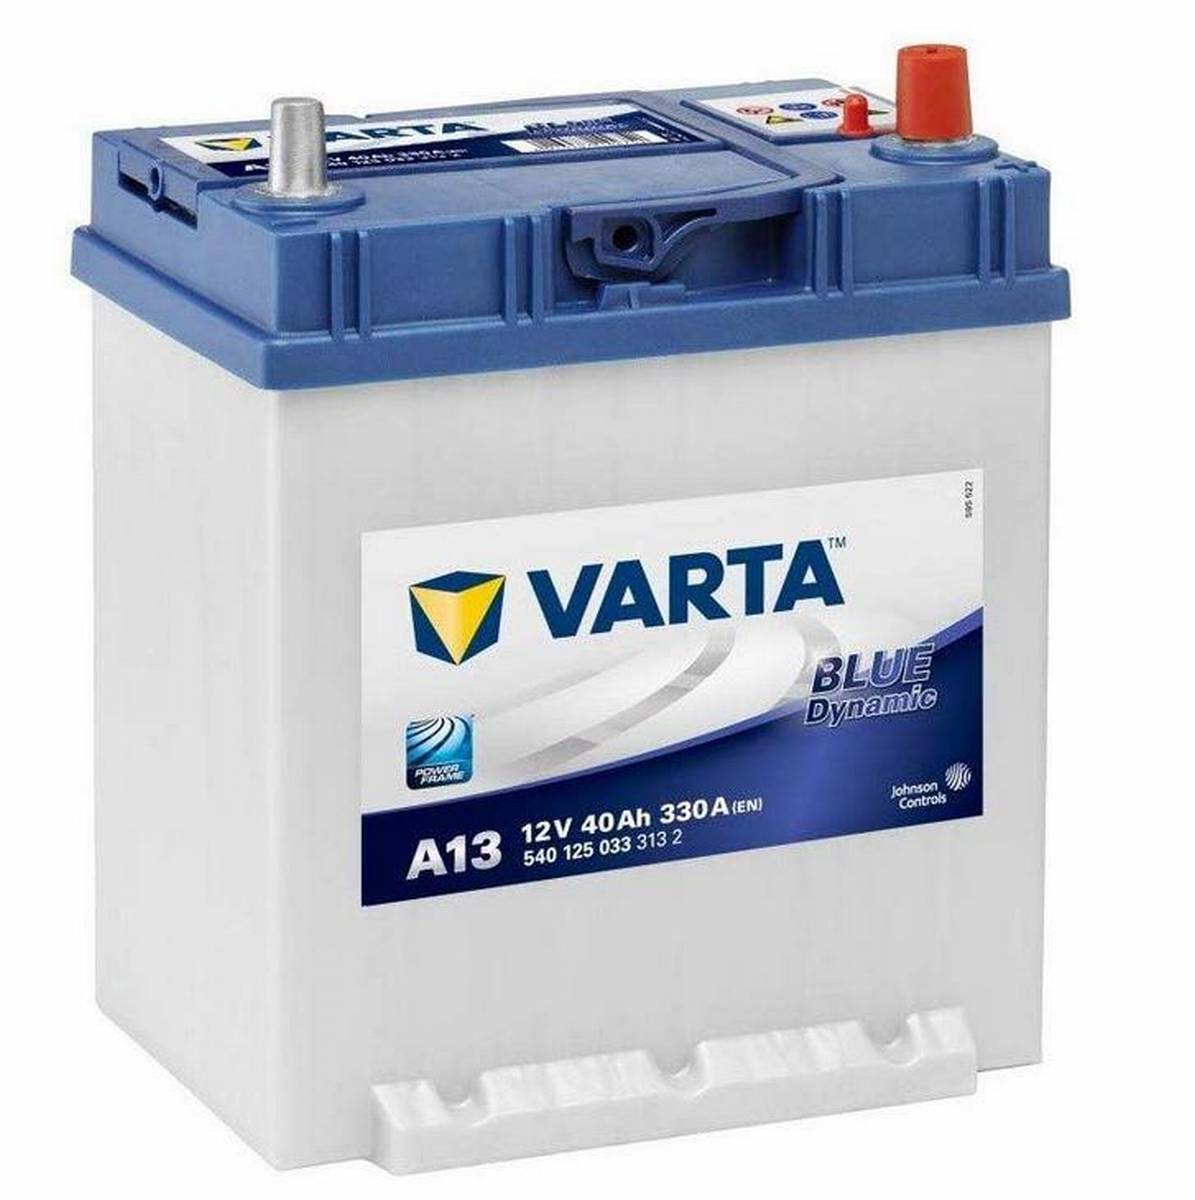 VARTA A13 Blue Dynamic 12V 40Ah 330A batteria auto 540 125 033